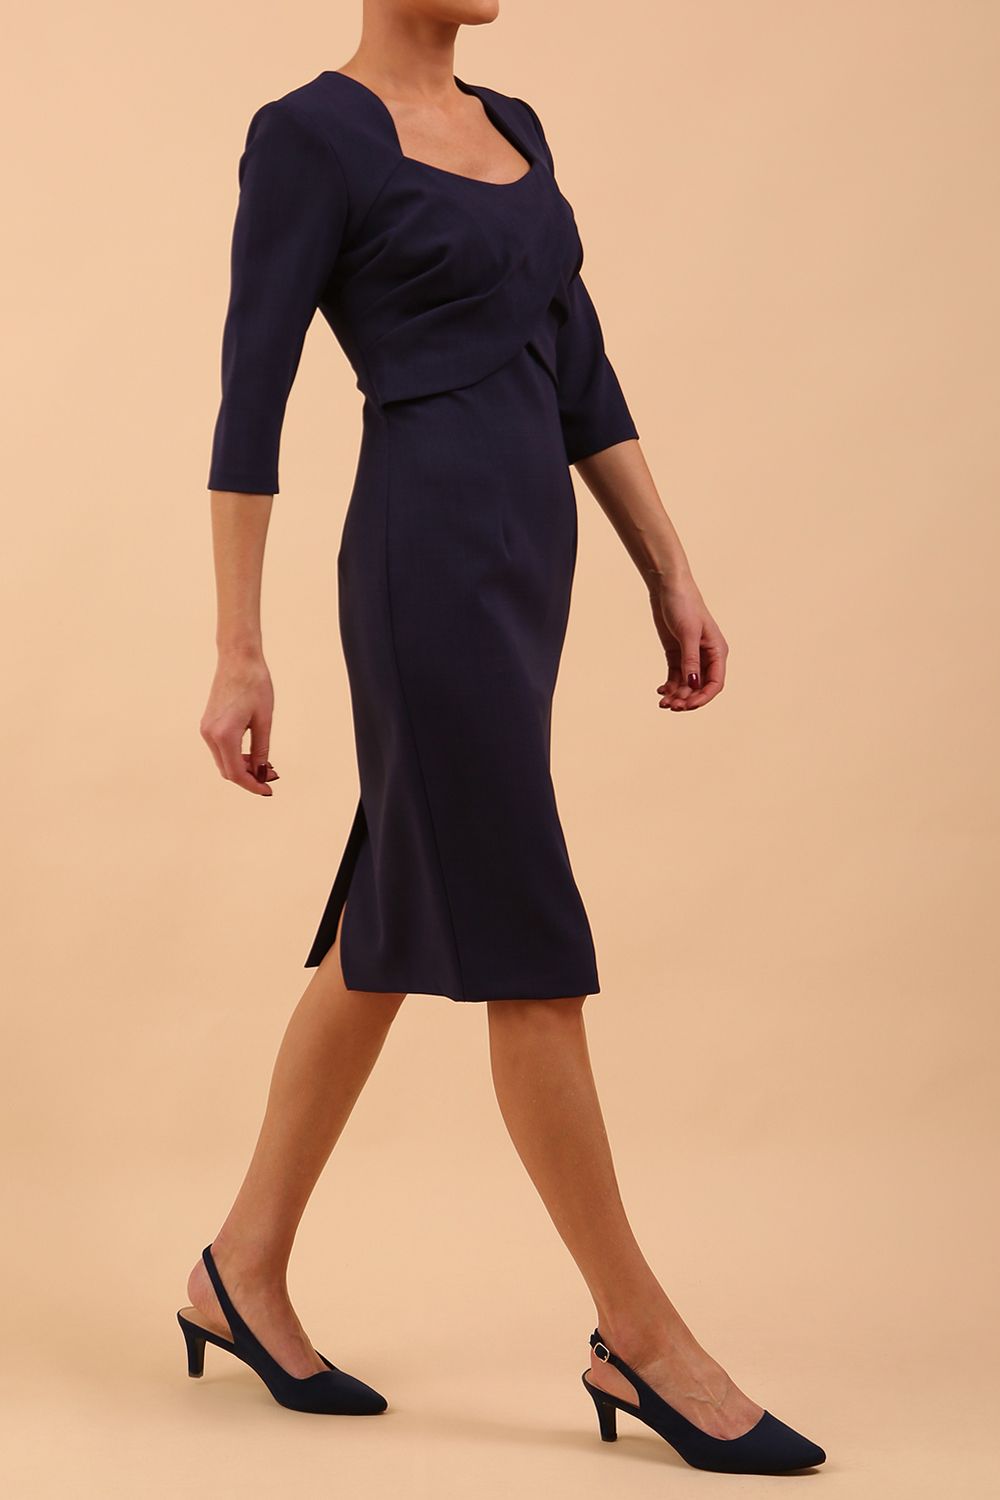 Model wearing Diva Catwalk Lantana Square Neck Pencil Dress 3/4 Sleeve in Navy front side